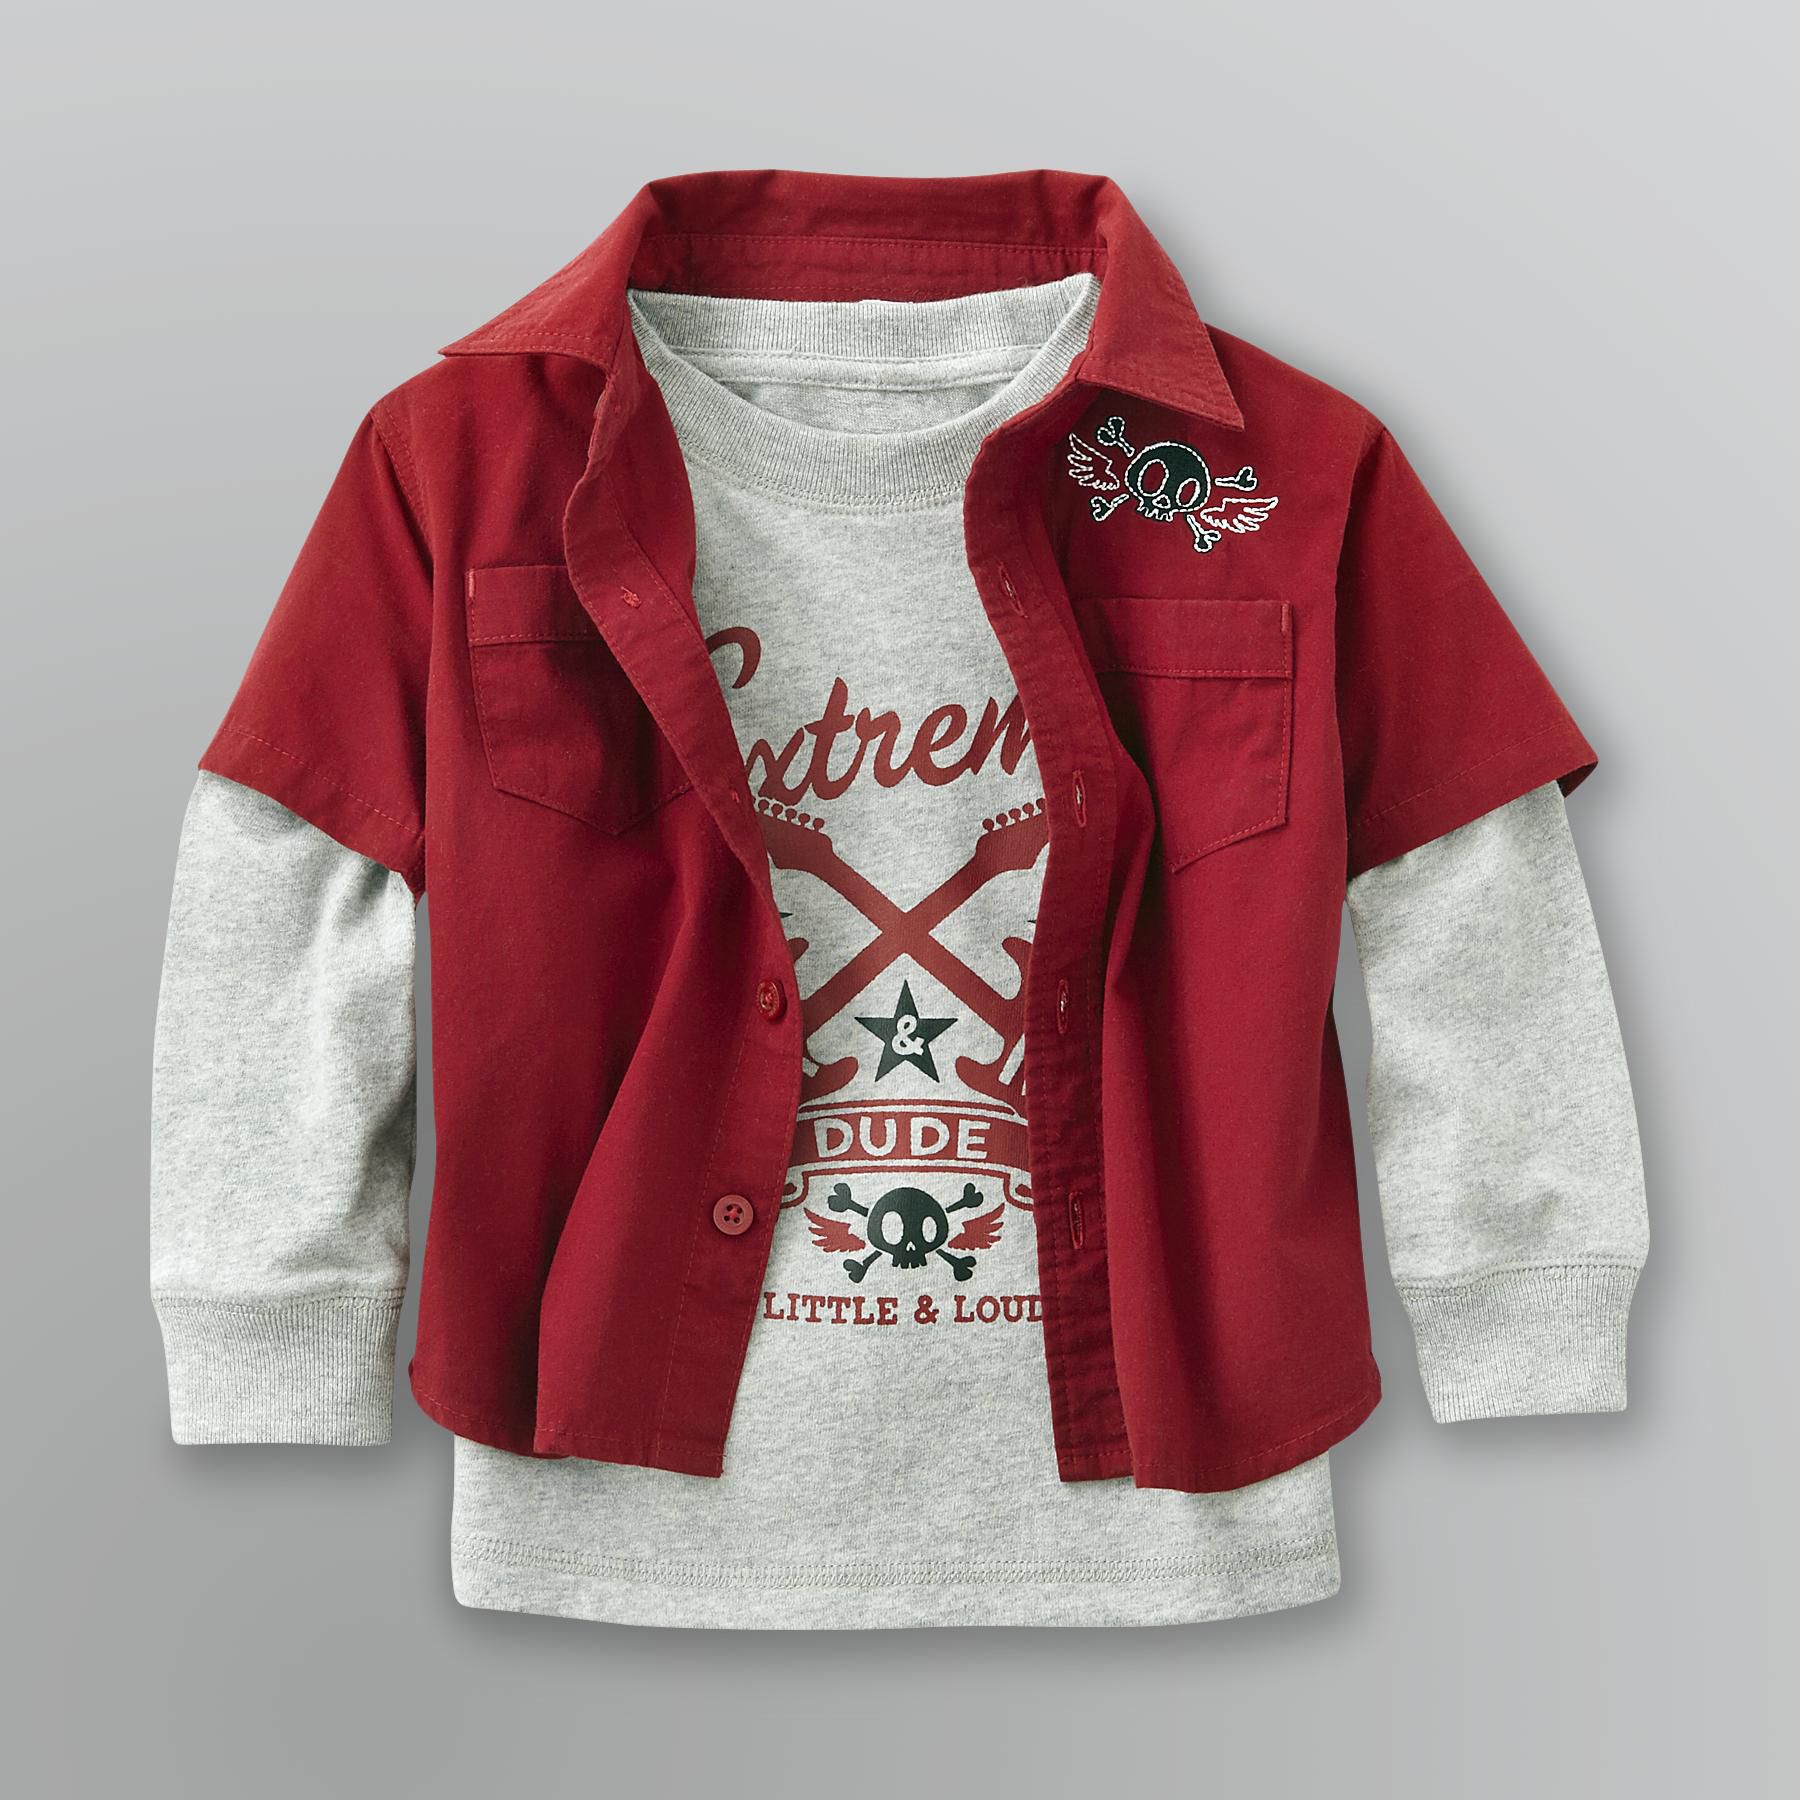 Toughskins Infant & Toddler Boy's Rock 'n' Roll Graphic Shirt Set